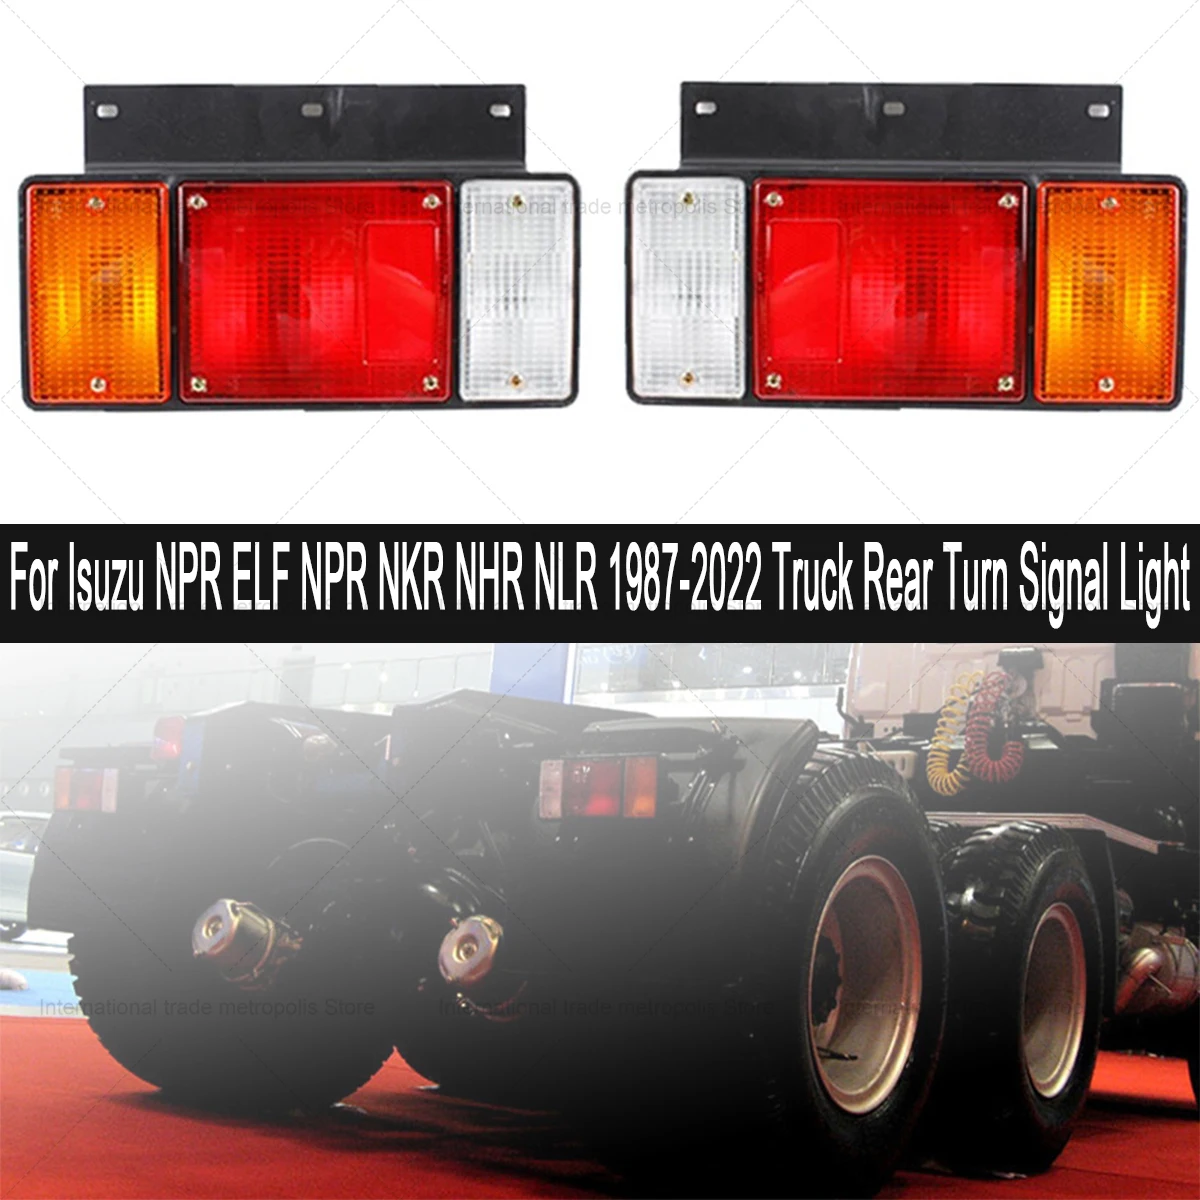 

Car Rear Tail Light For Isuzu NPR ELF NPR NKR NHR NLR 1987-2022 Truck Rear Turn Signal Light Stop Brake Lamp Car Accessories